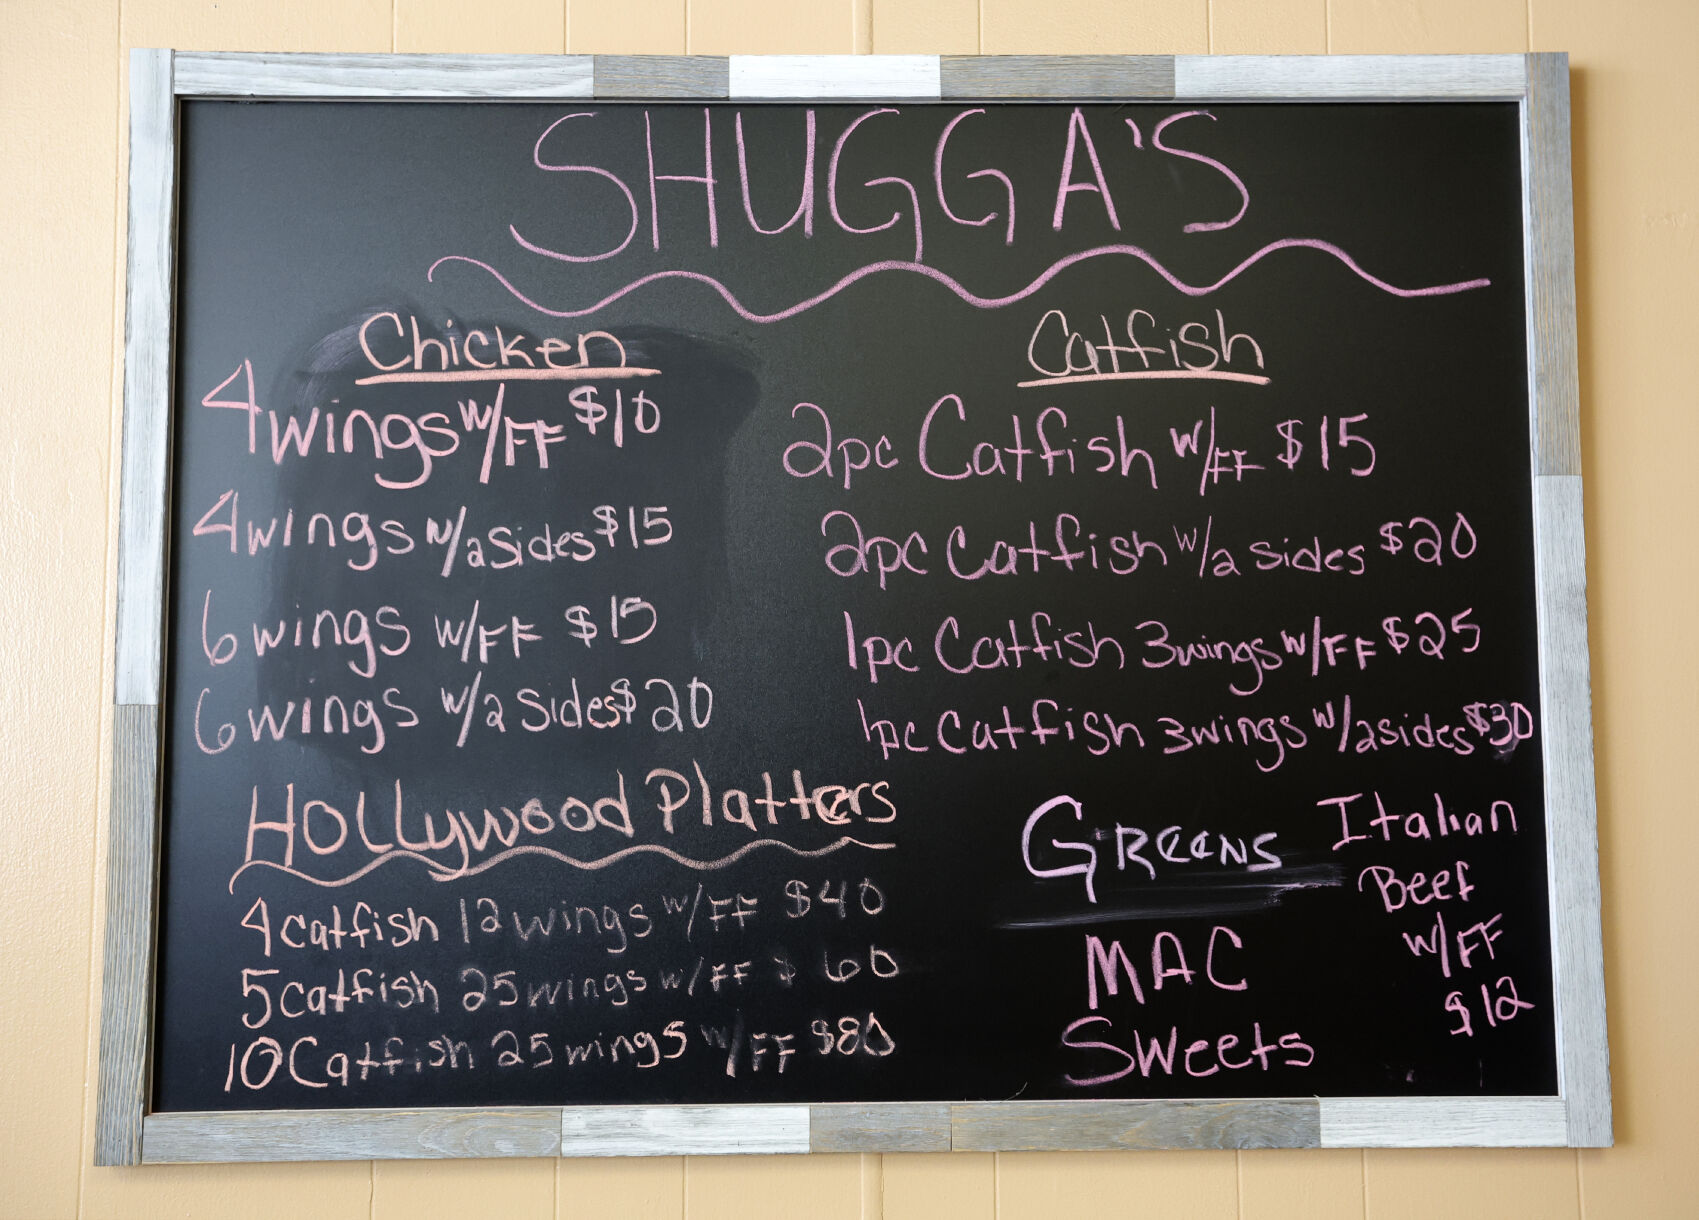 A menu at Shugga